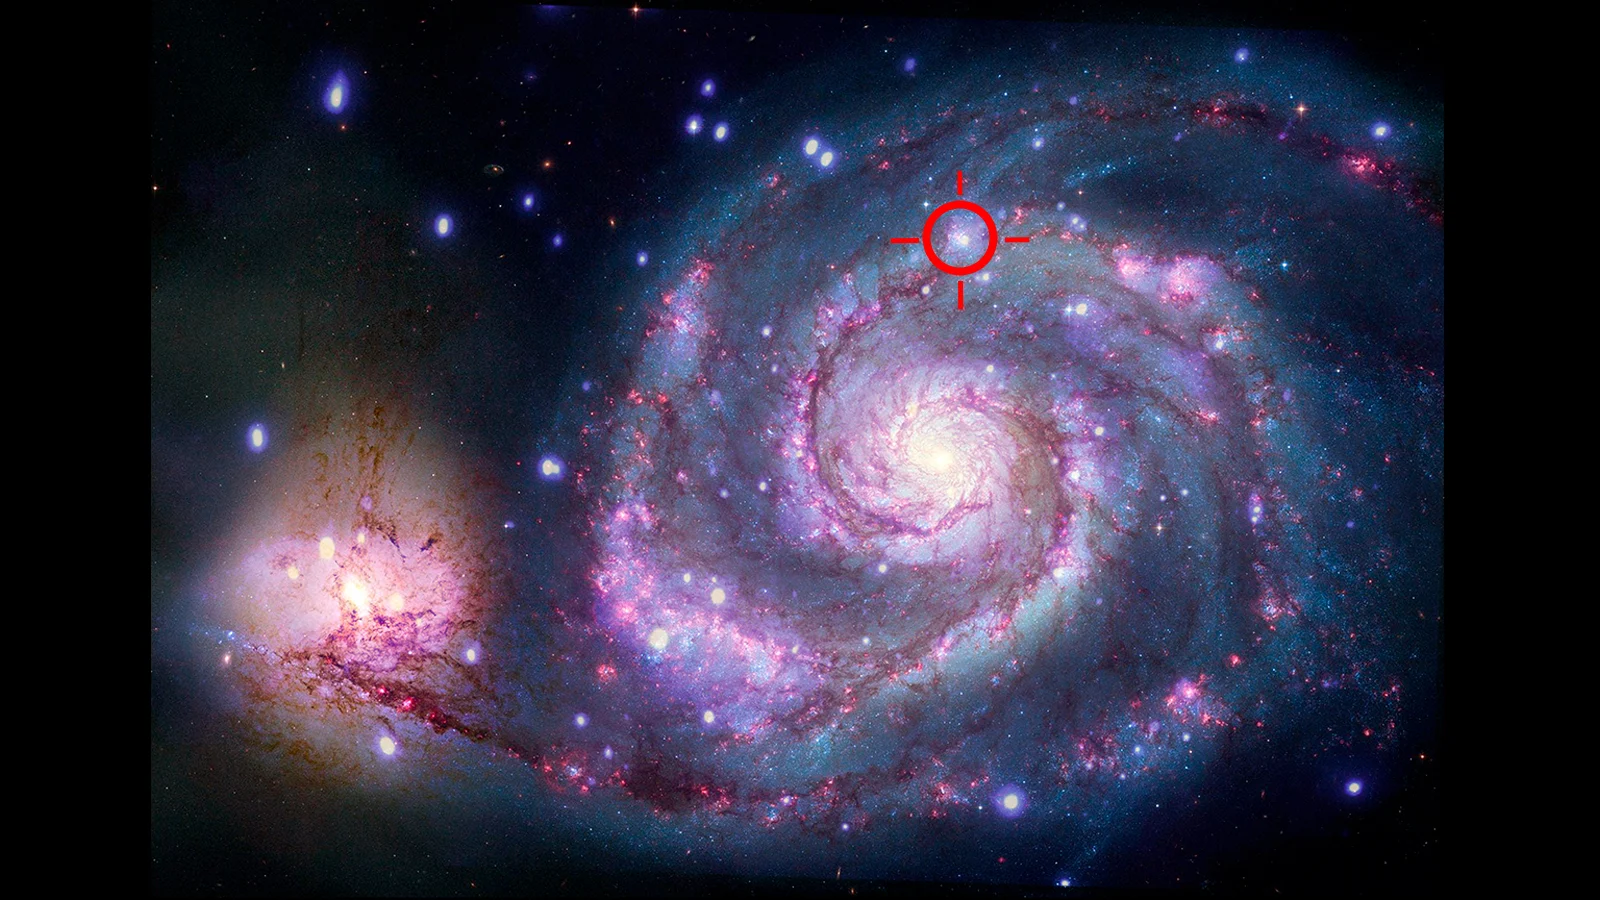 Extragalactic Planet Candidate Whirlpool Galaxy m51 - NASA/ESA/CXC/STScI/SAO/R. DiStefano/Grendler/S. Sutherland